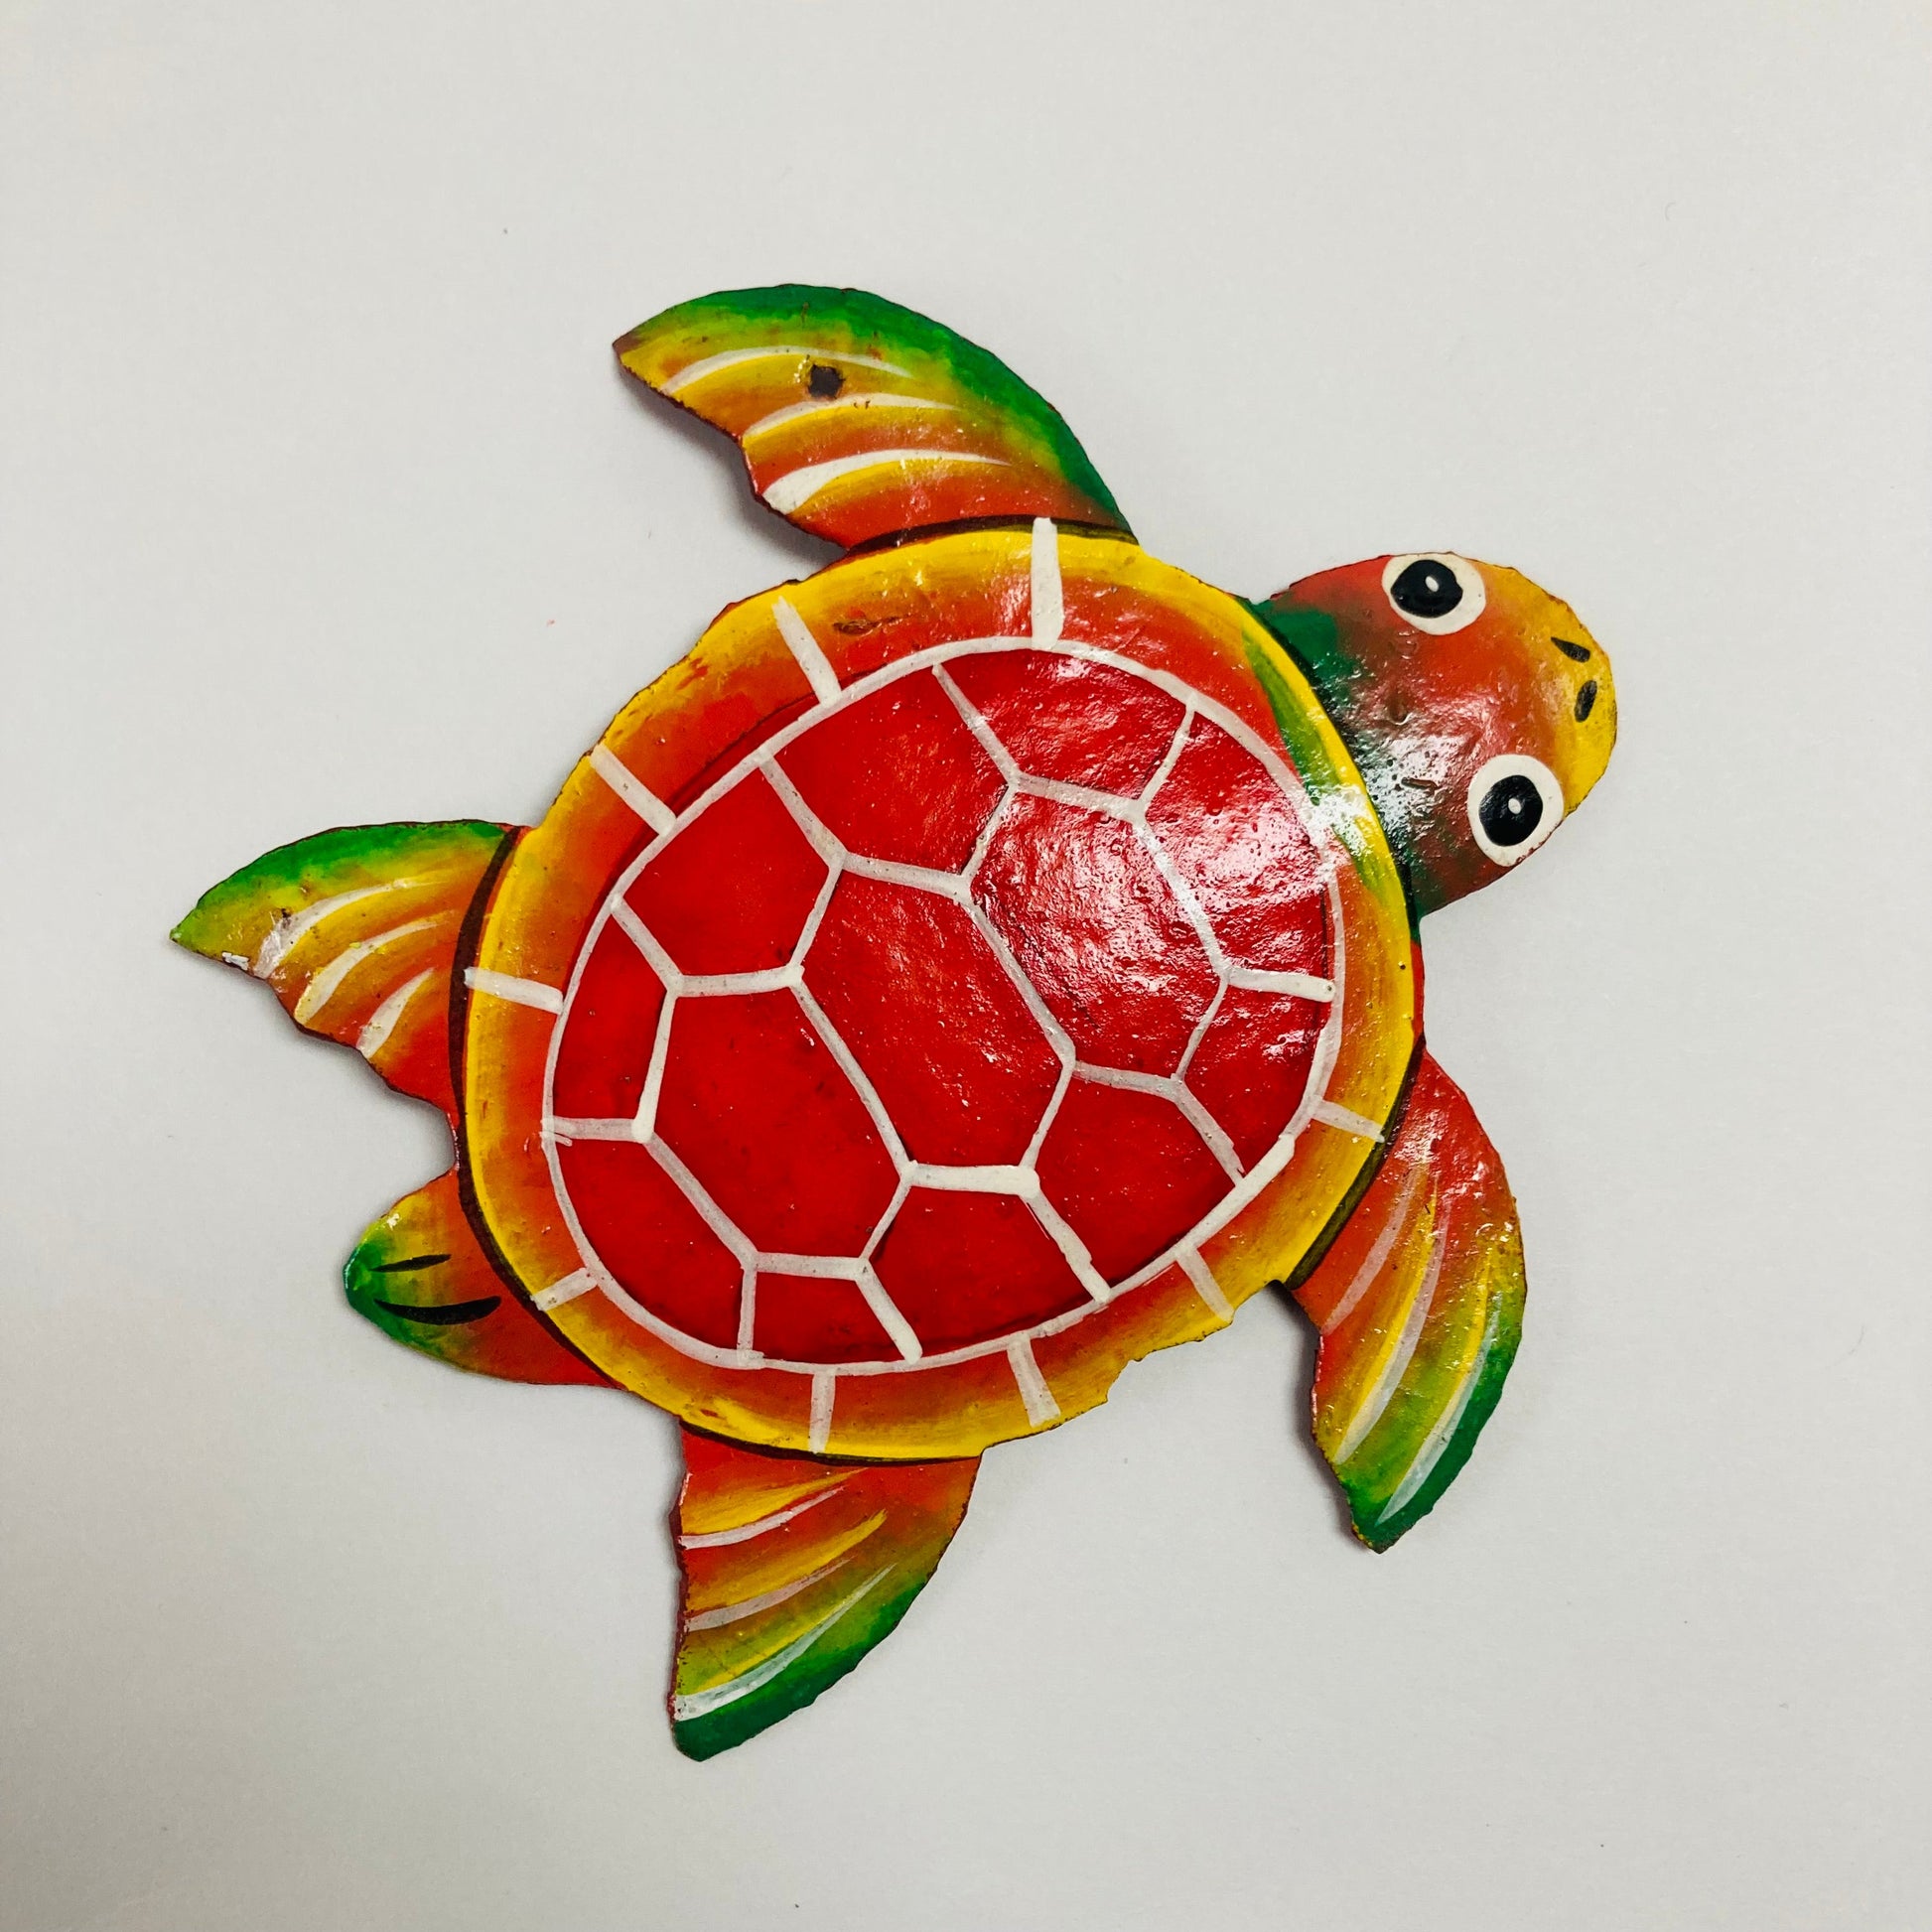 Metal Turtle Ornament